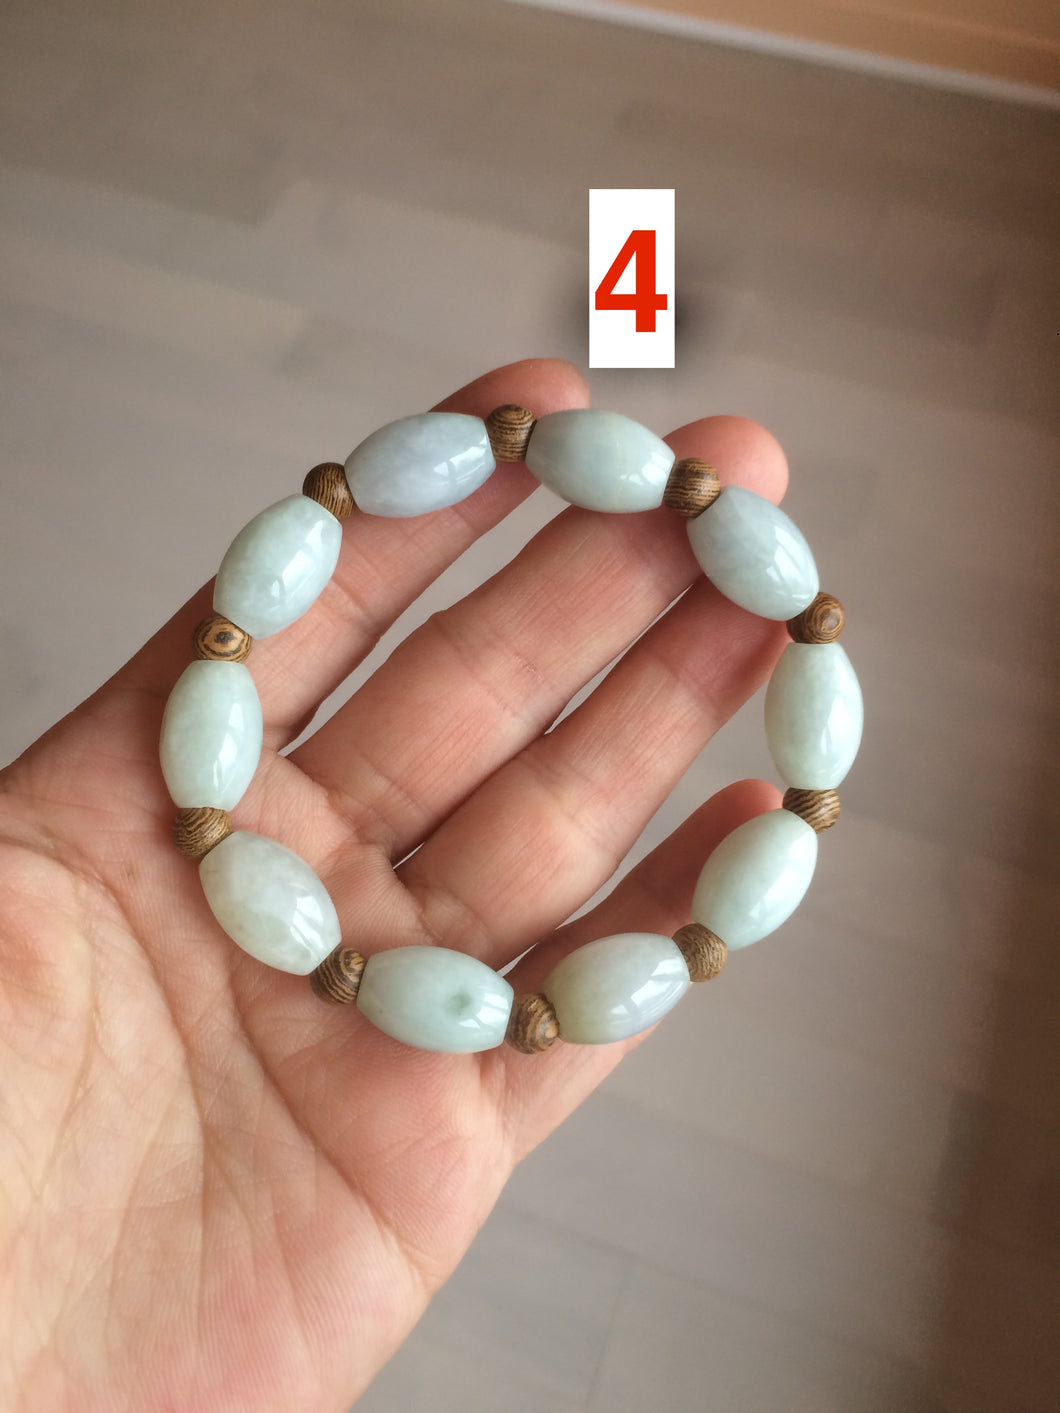 13x10mm 100% natural type A green jadeite jade olive shape(LU LU TONG) beads bracelet C33